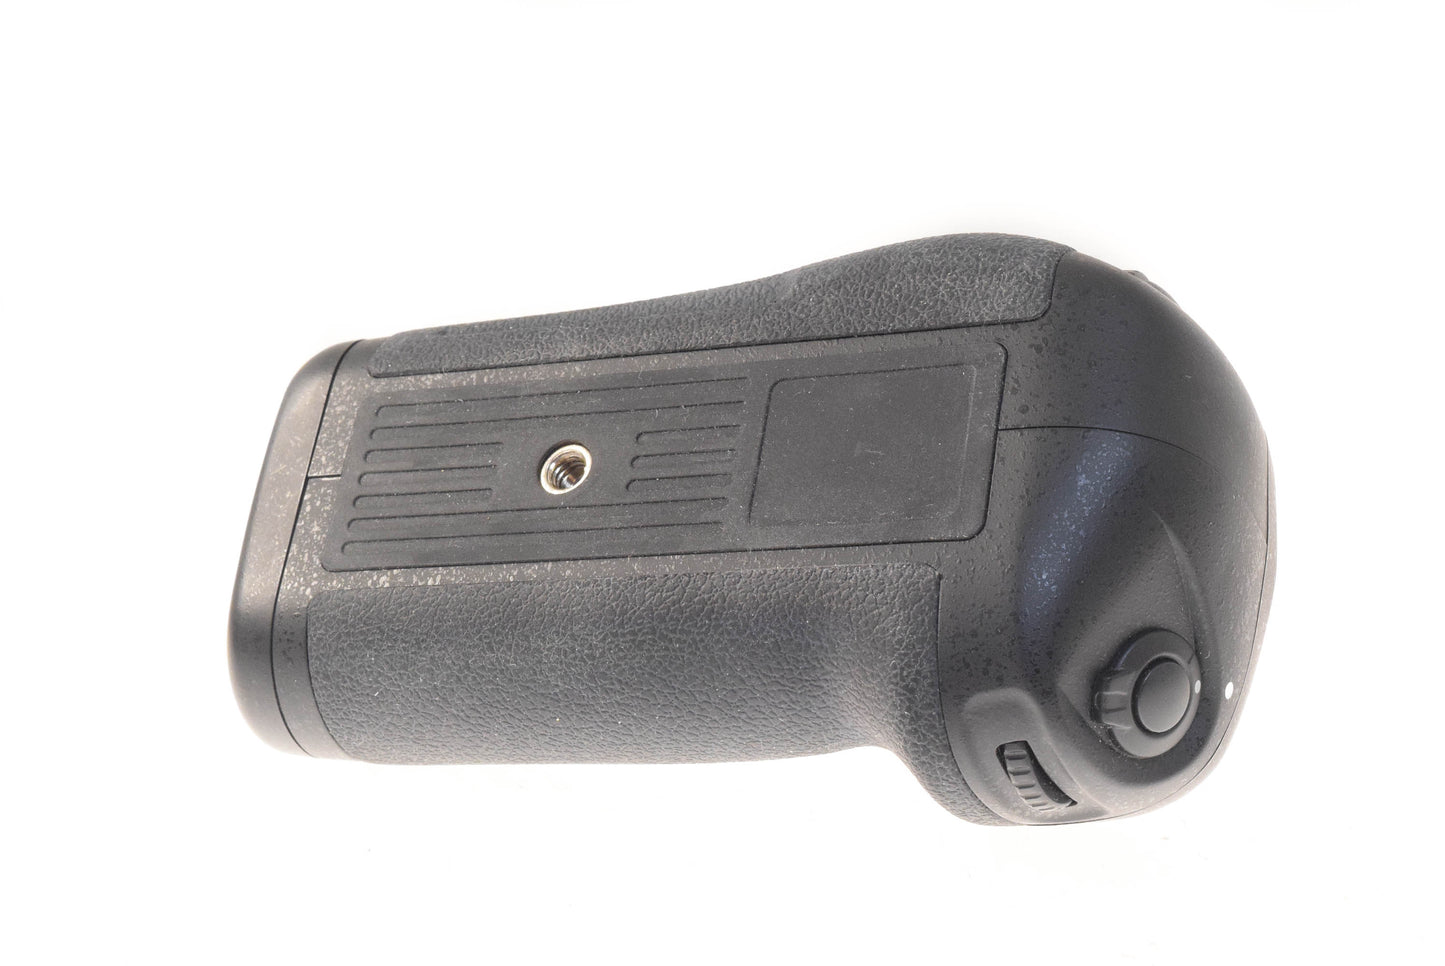 Jupio Battery Grip for D800 (JBG-N009)